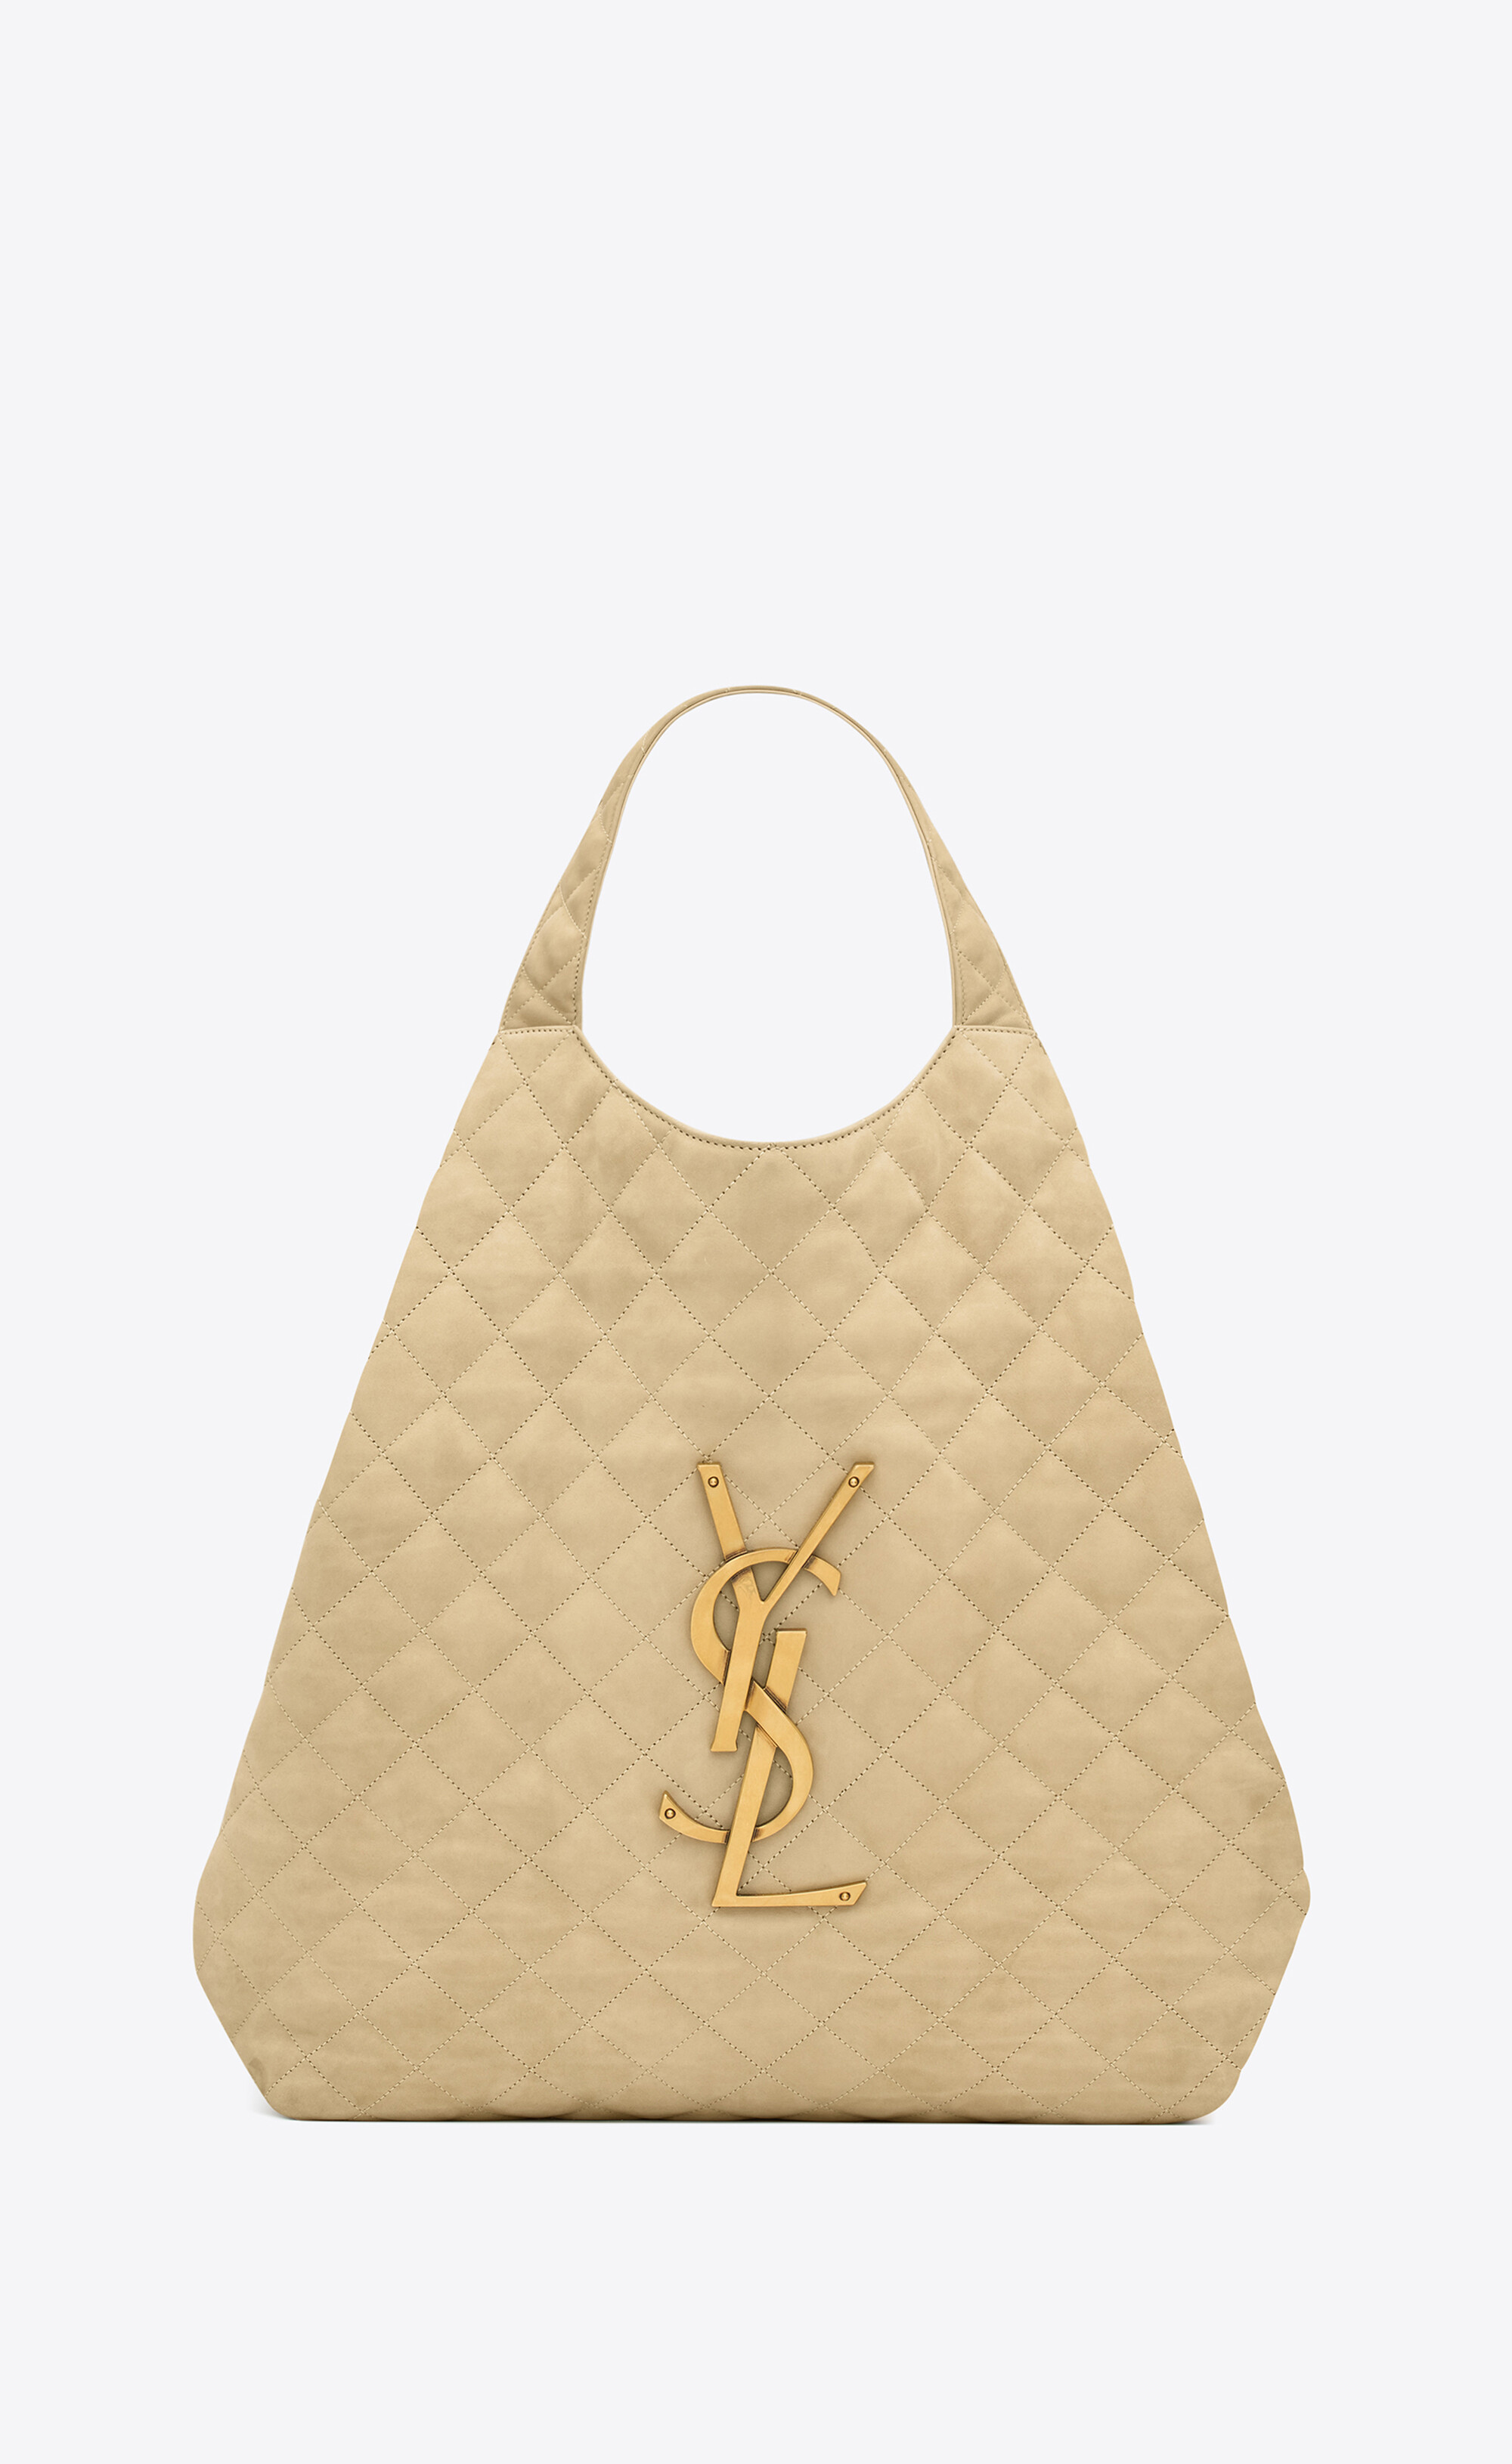 New @ysl ✨ Saint Laurent iconic bag ICARE #YSL #サンローラン